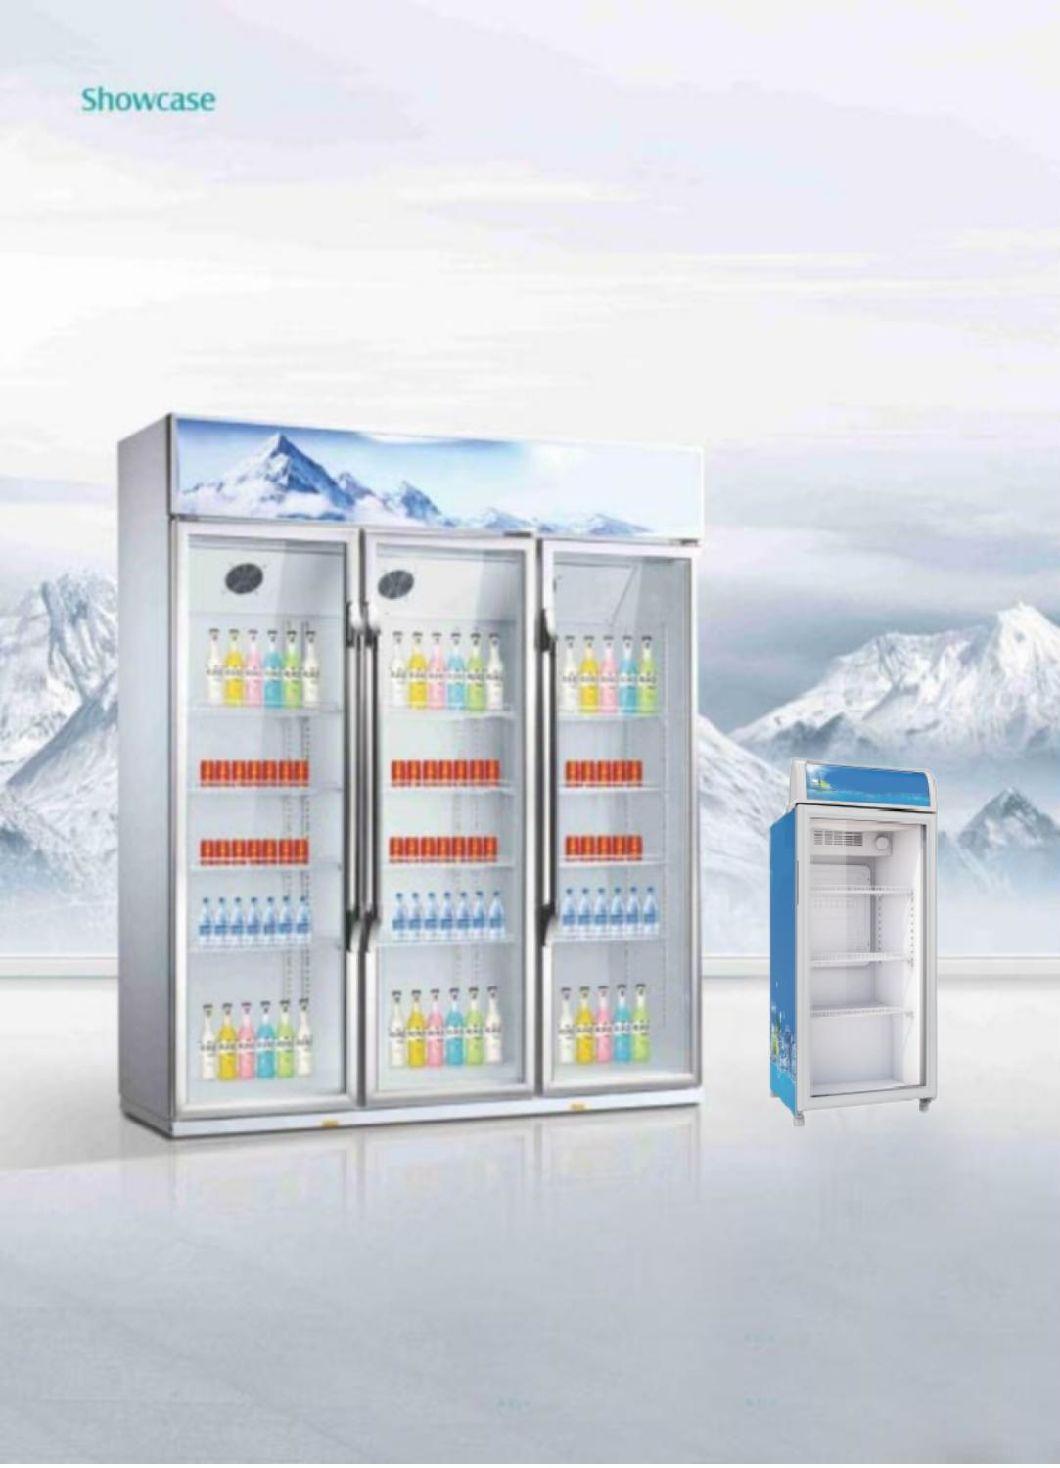 Transparent Glass Door Direct Cooling Upright Soft Drink Display Refrigerator Showcase